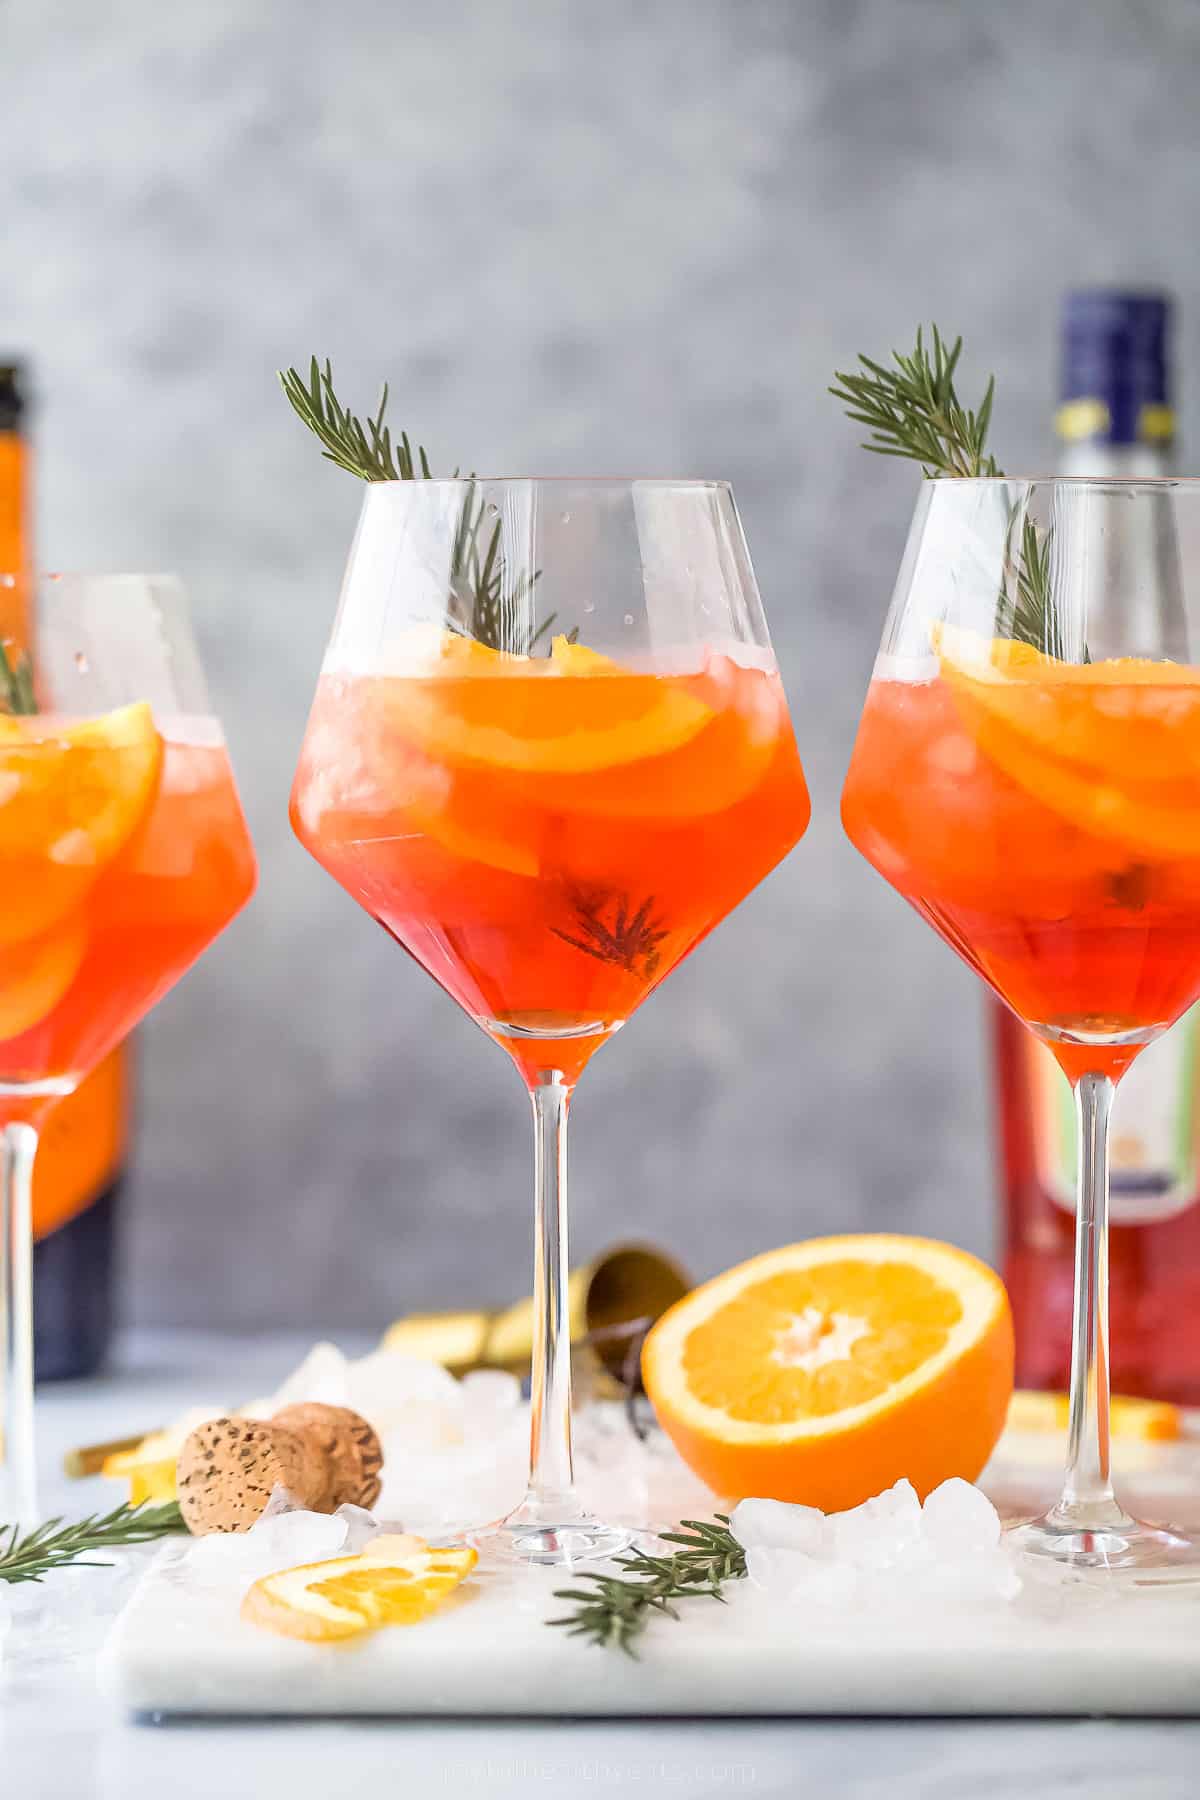 three holiday aperol spritz cocktails - a dark orange drink with orange slices and rosemary garnish